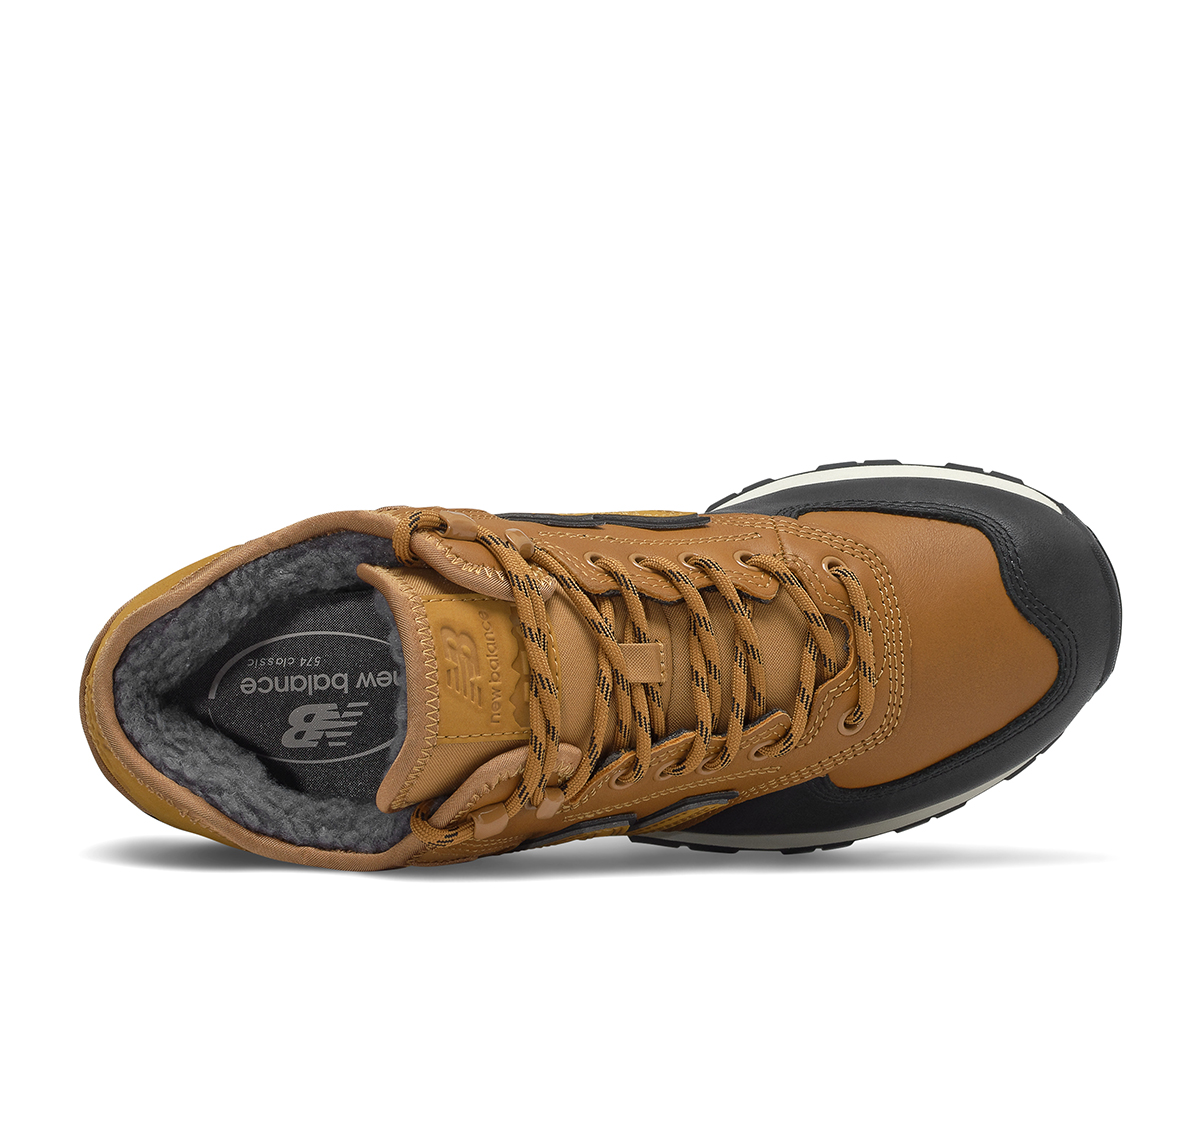 New Balance 574 Boot - Workwear top